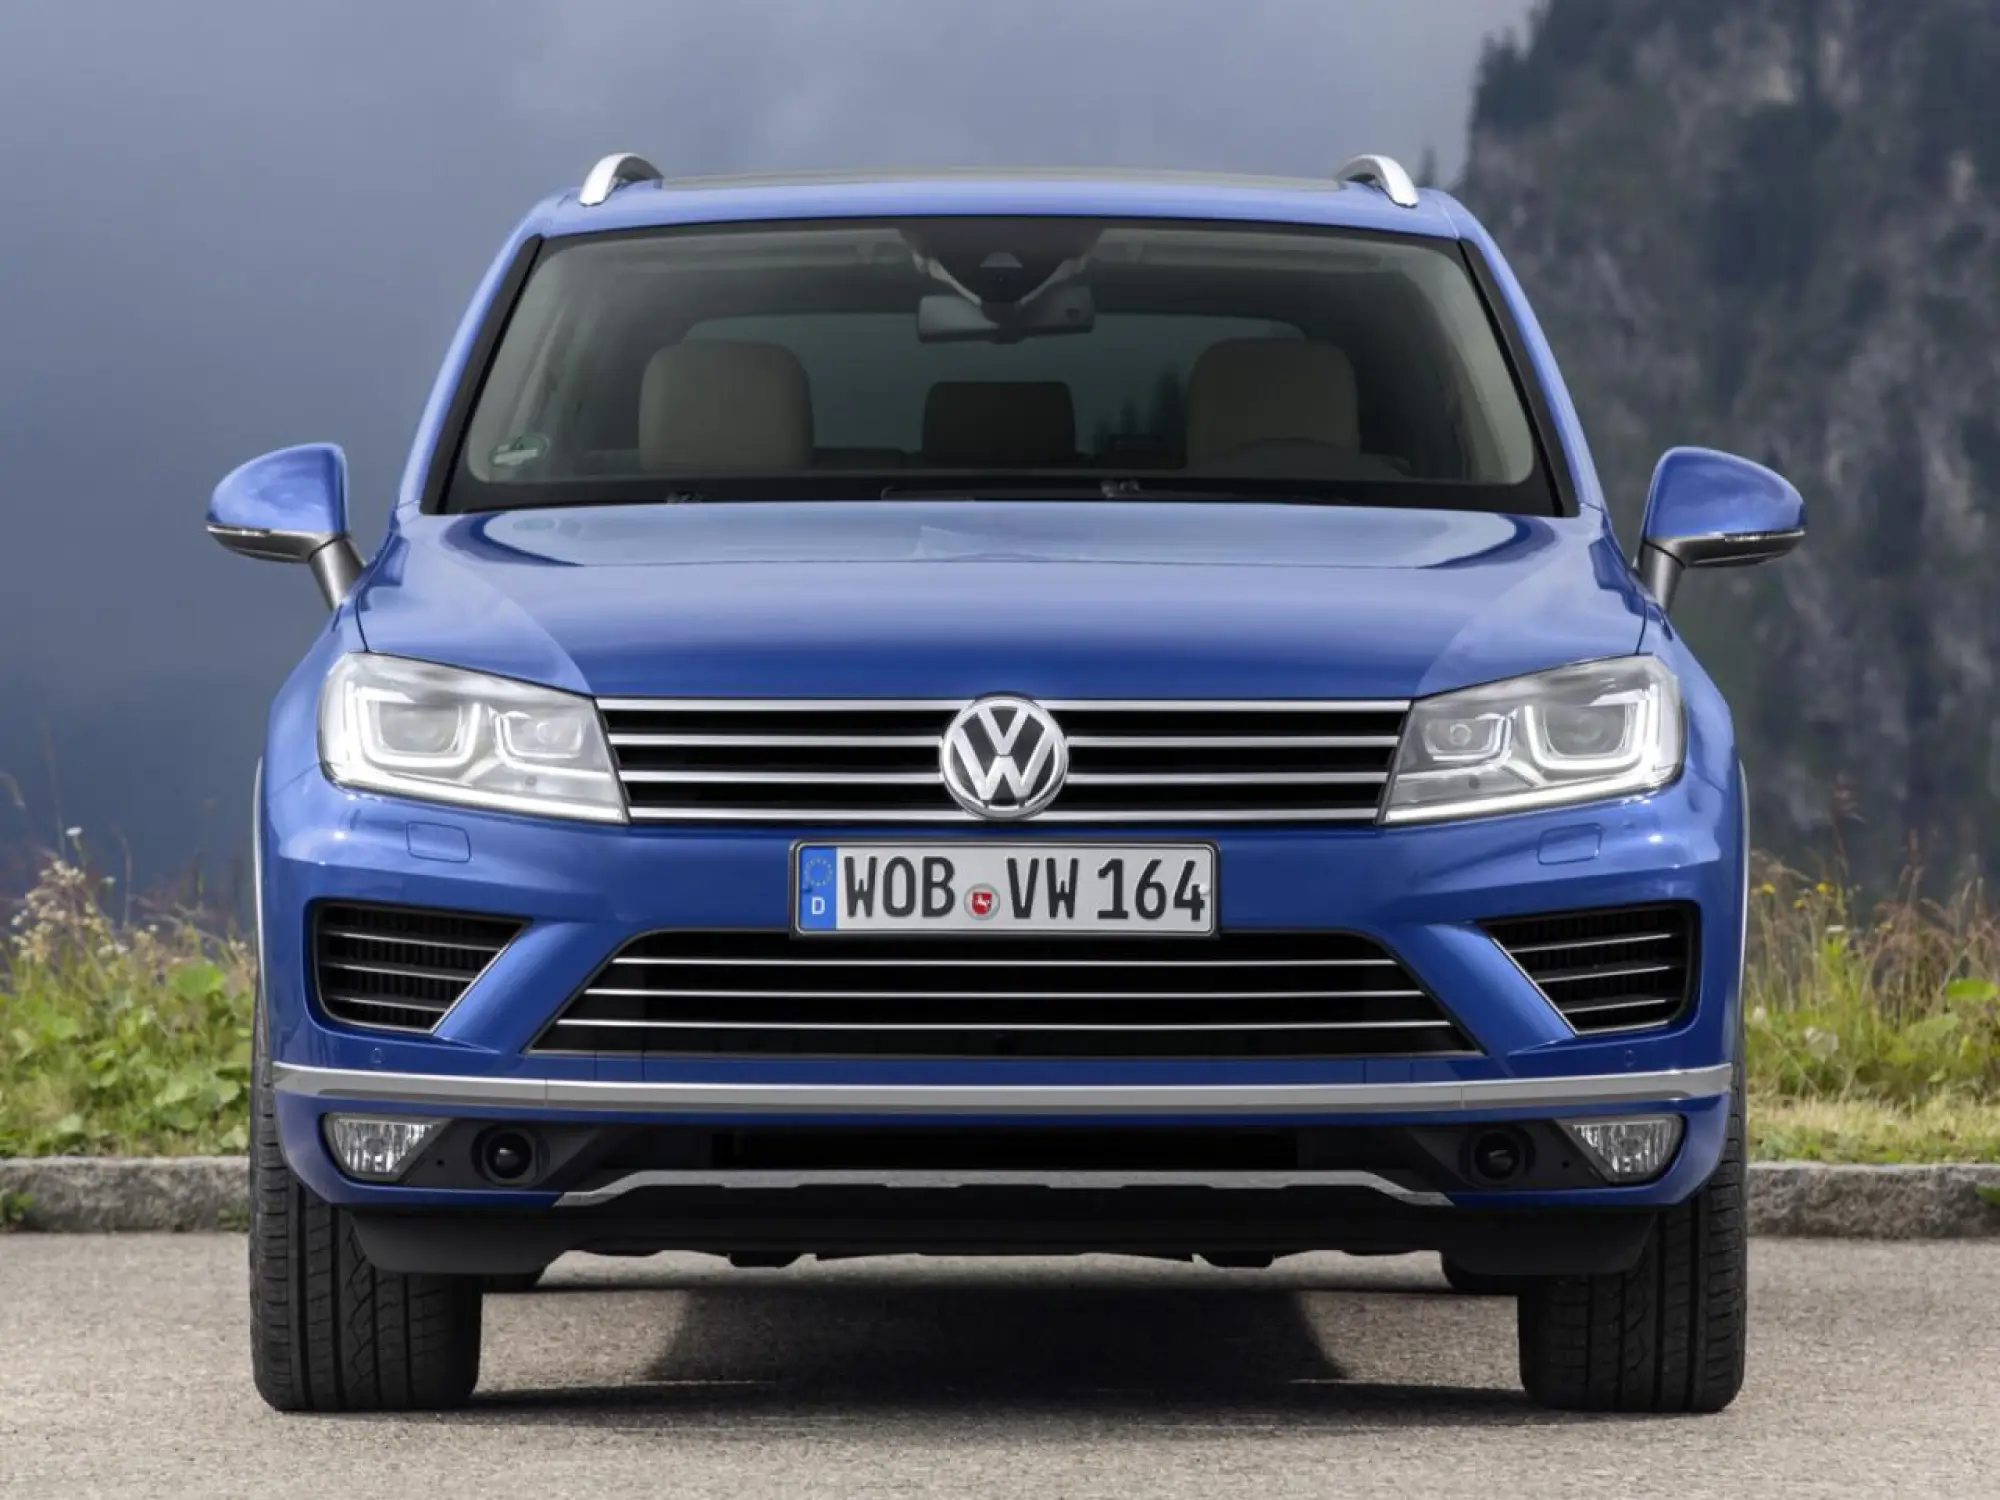 Volkswagen Touareg 2015 3.0 TDI - 2